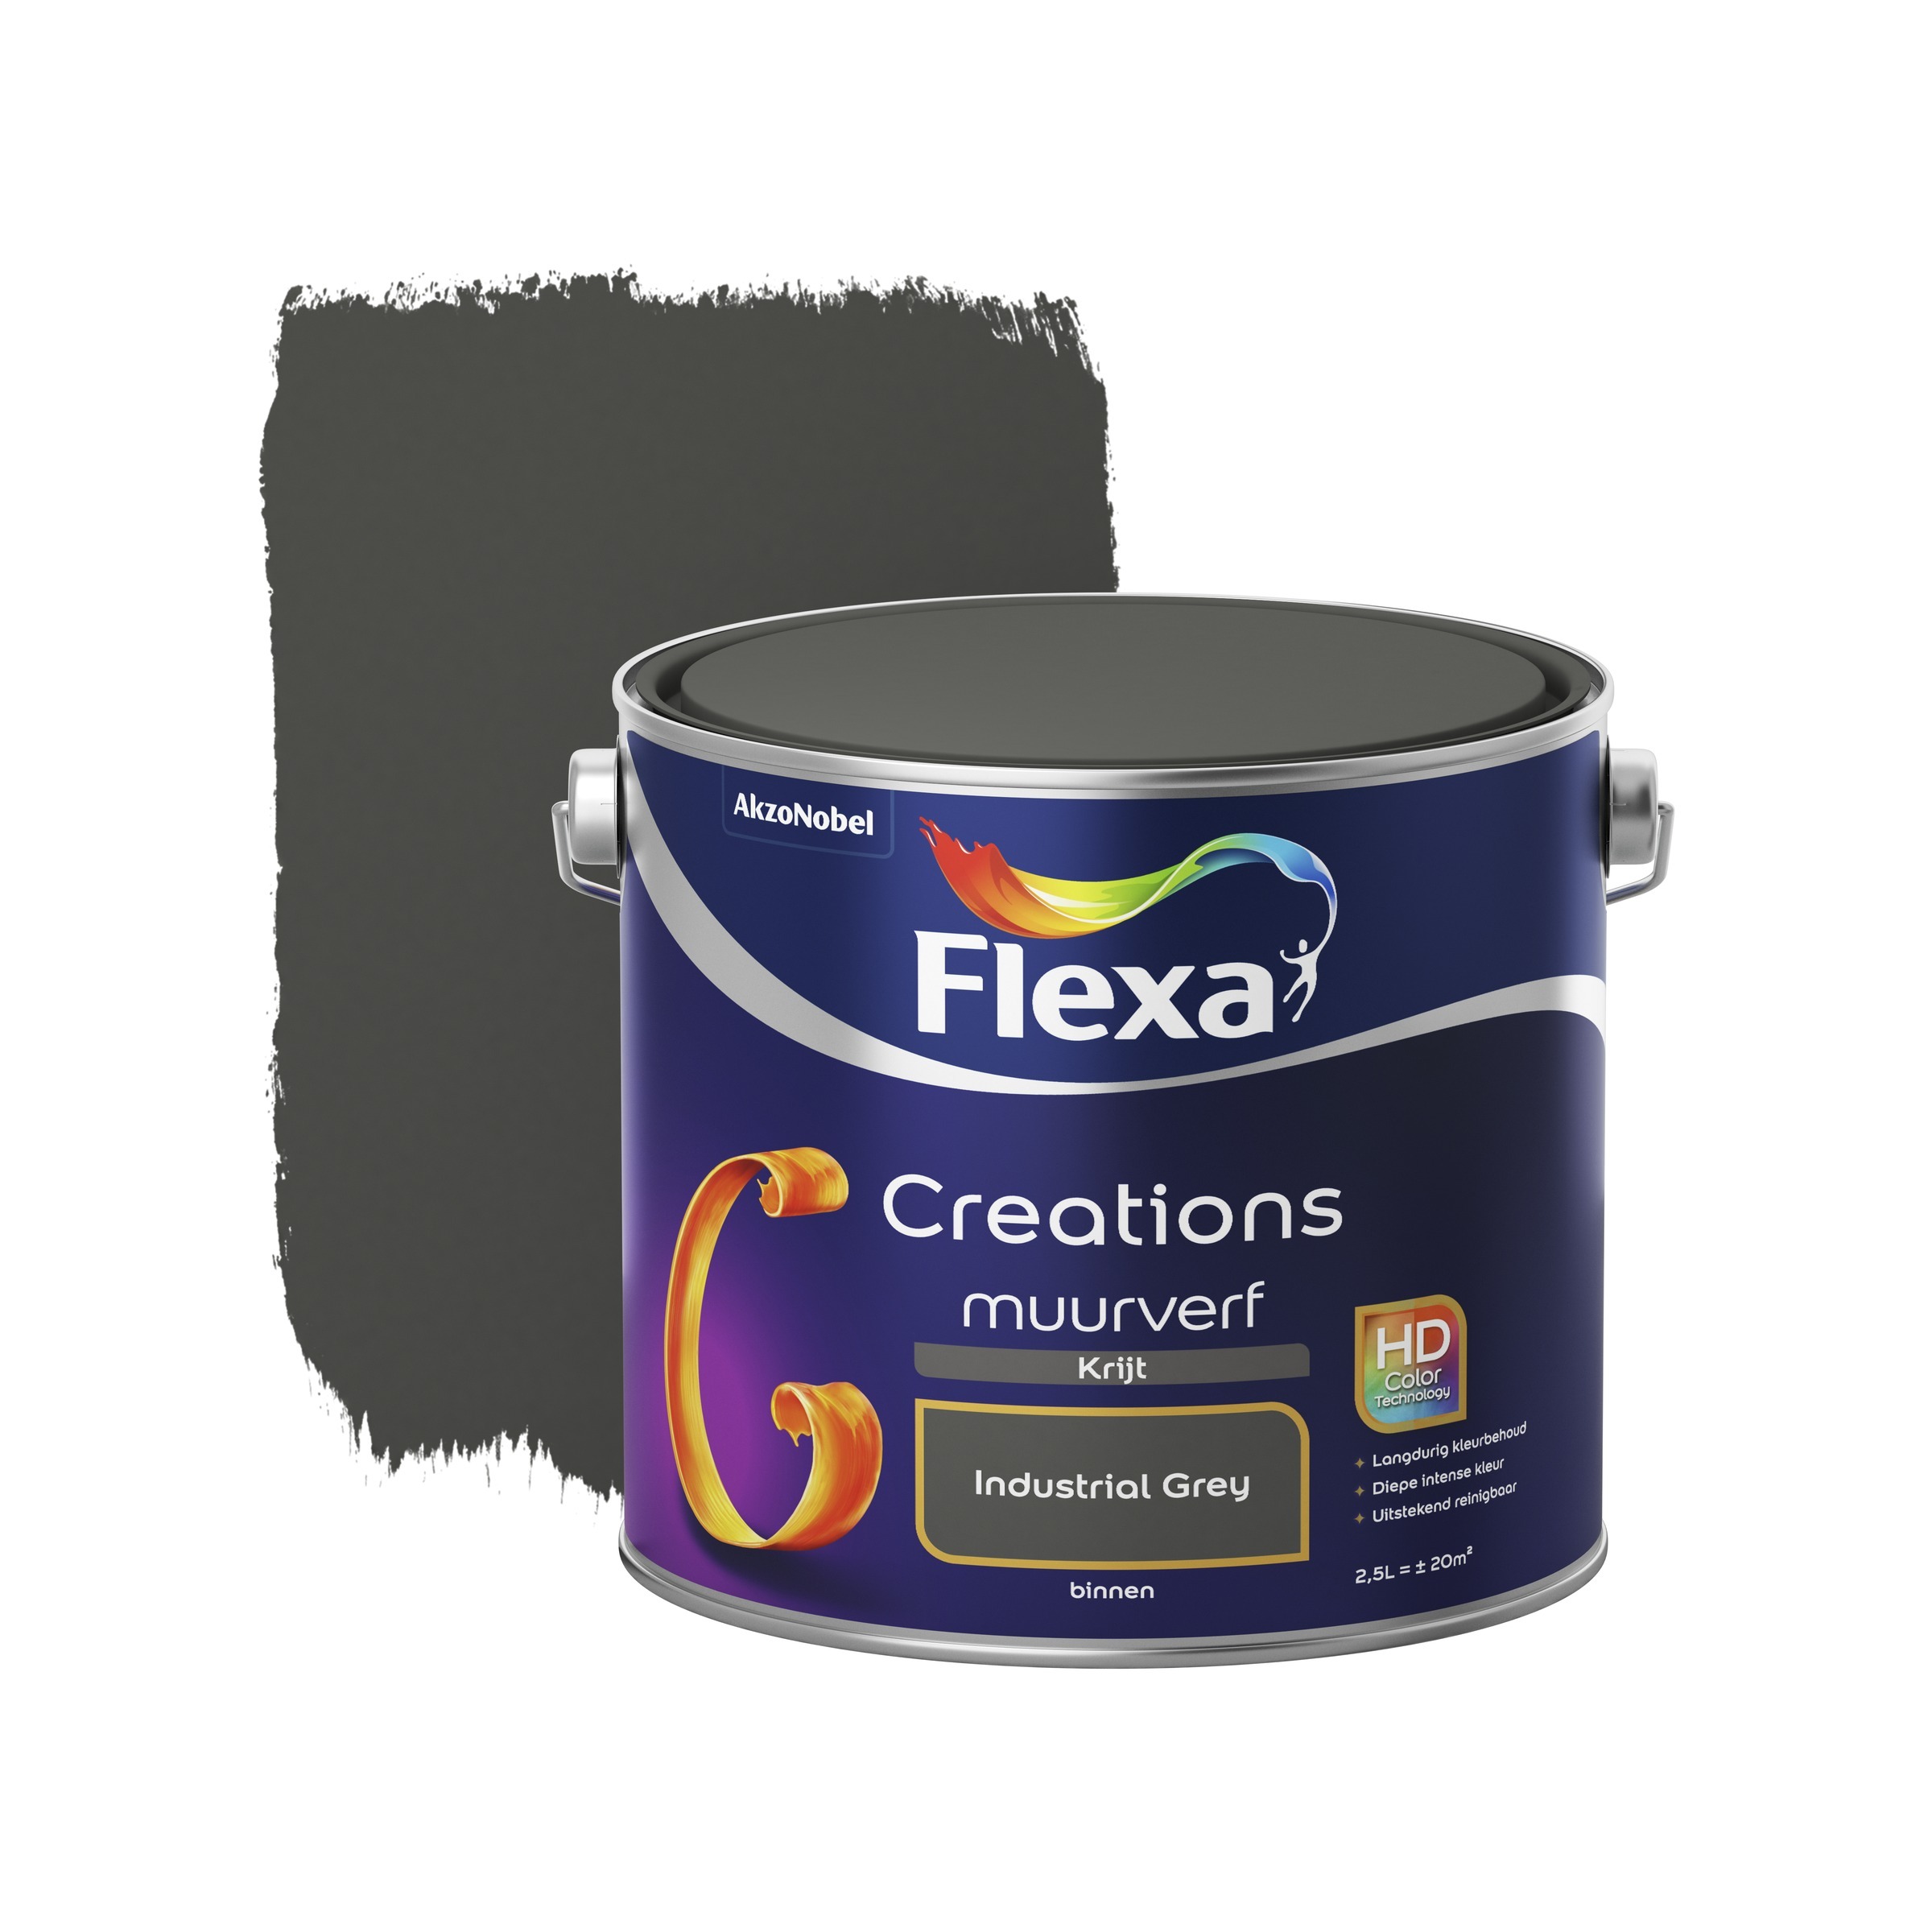 FLEXA Creations muurverf industrial grey krijt 2 5 liter